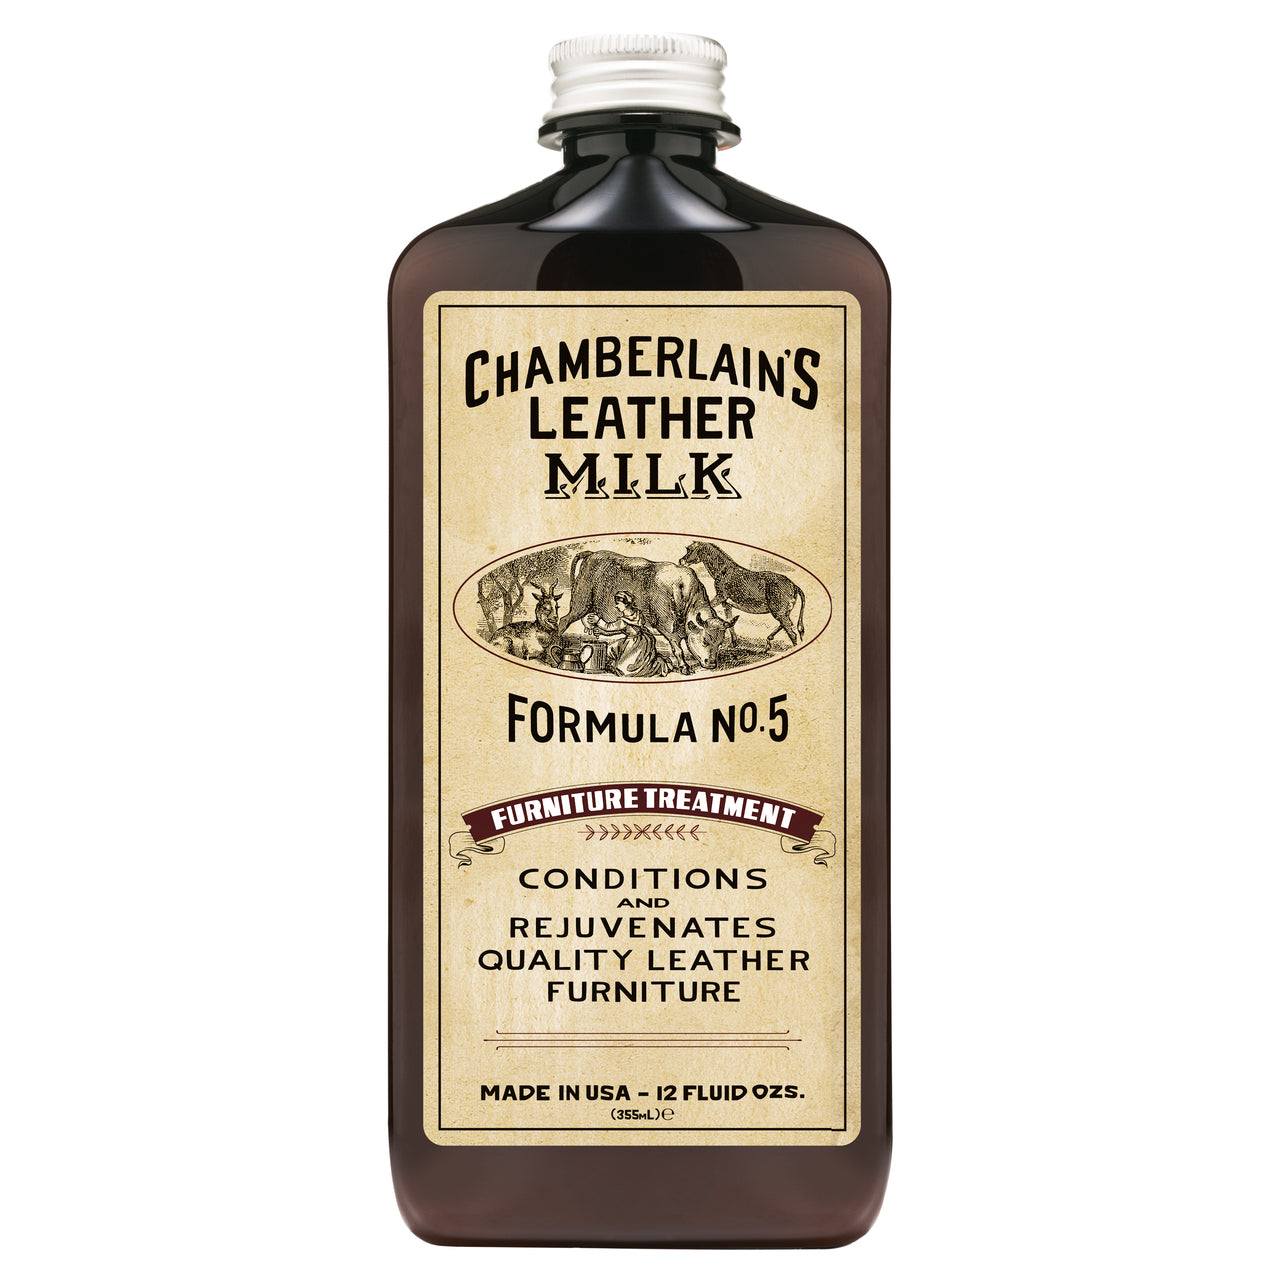 Chamberlain's Leather Milk - Formula No. 5 Furniture Treatment